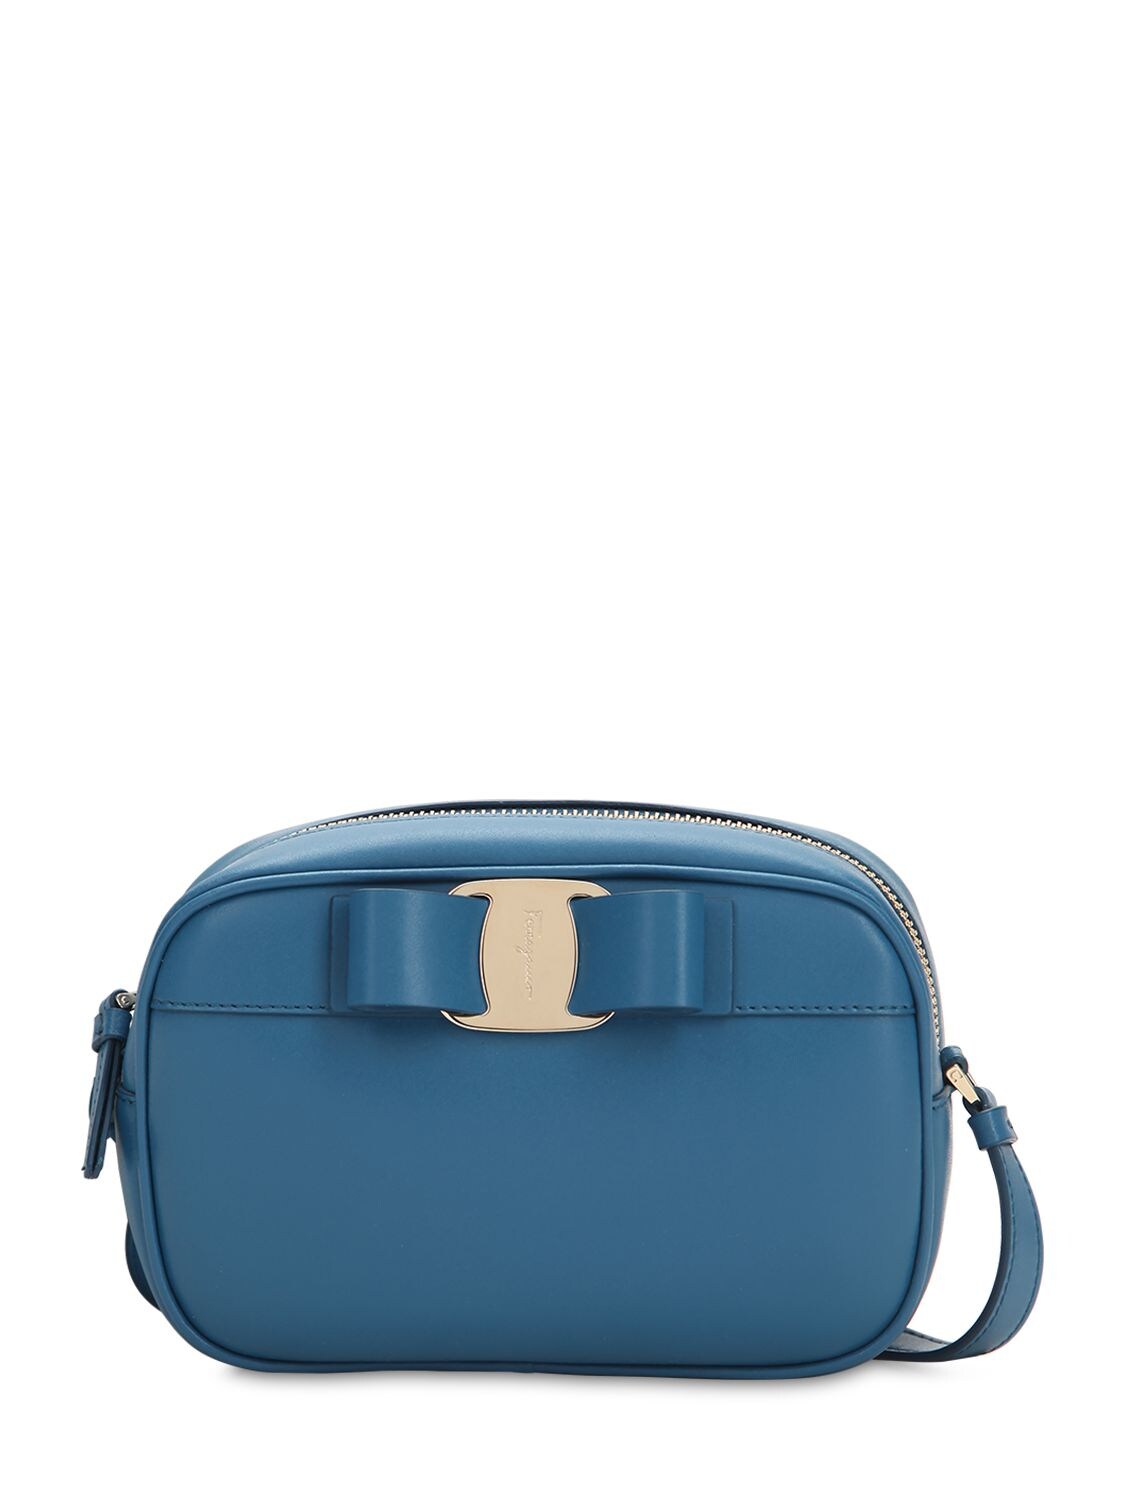 Ferragamo Leather Camera Bag In Blue